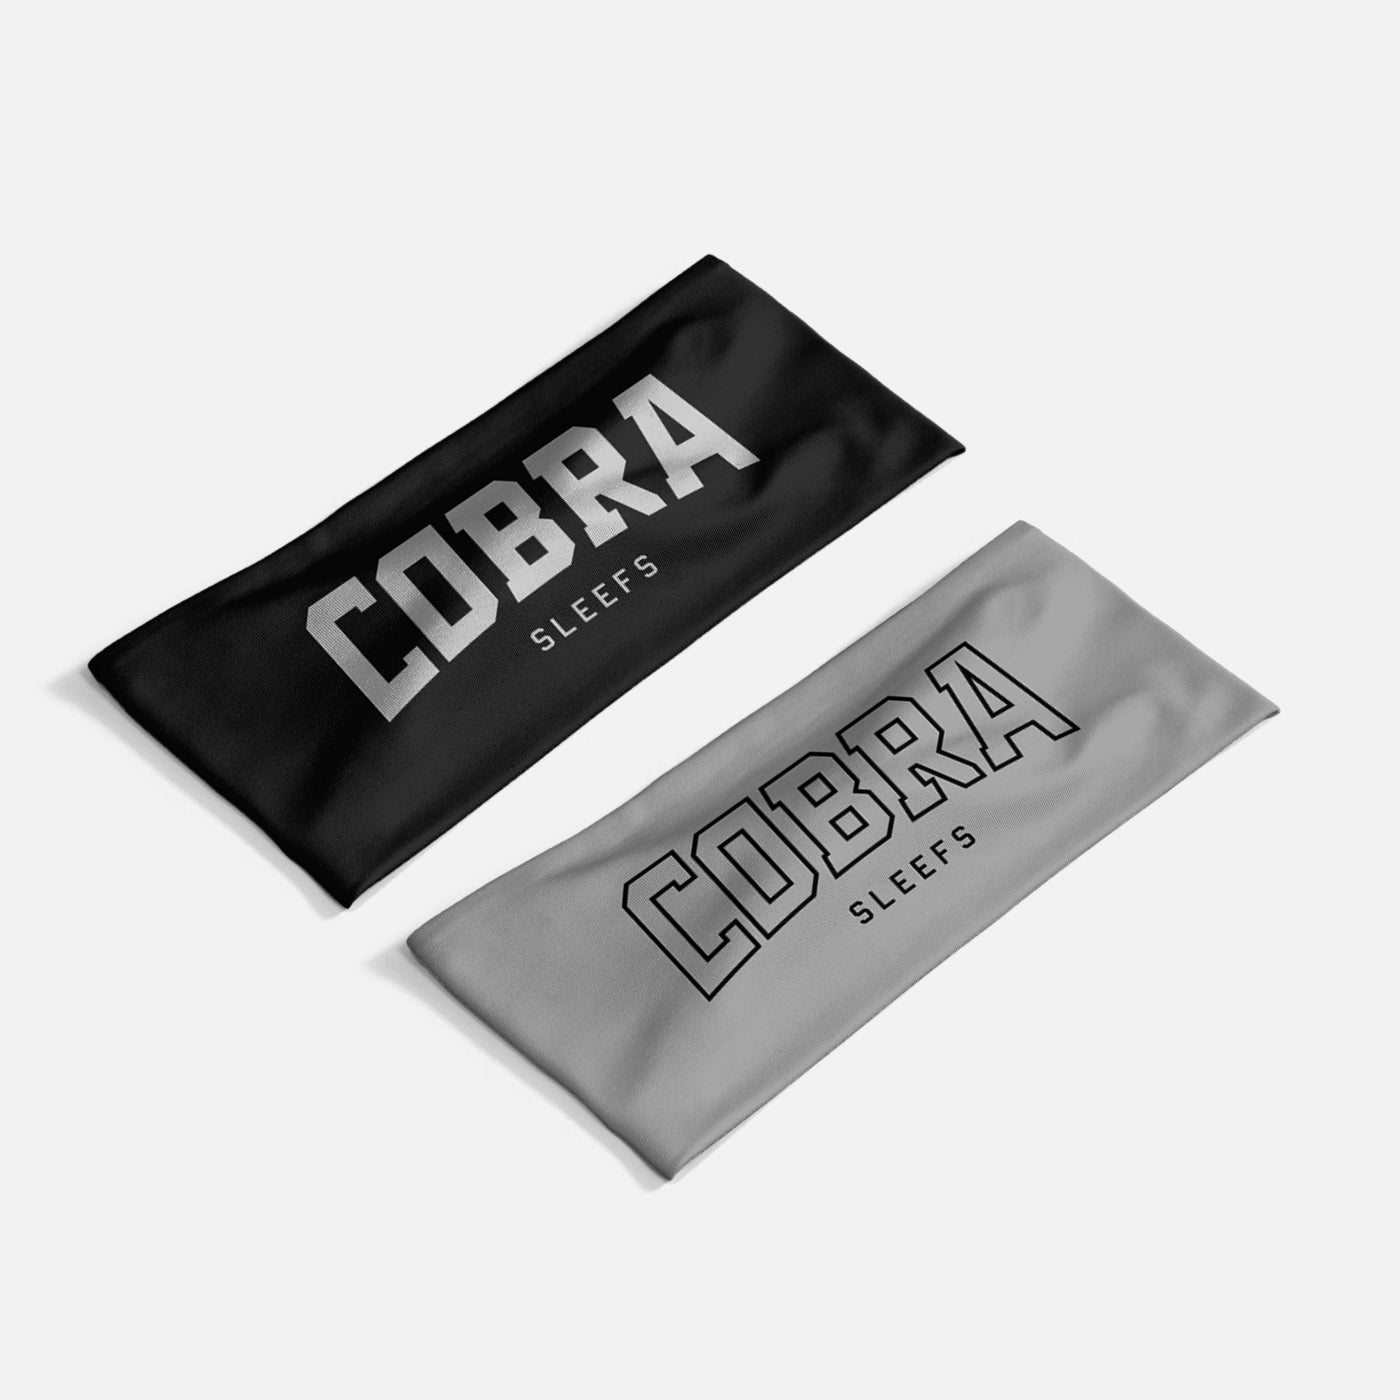 Cobra Headband 2-Pack